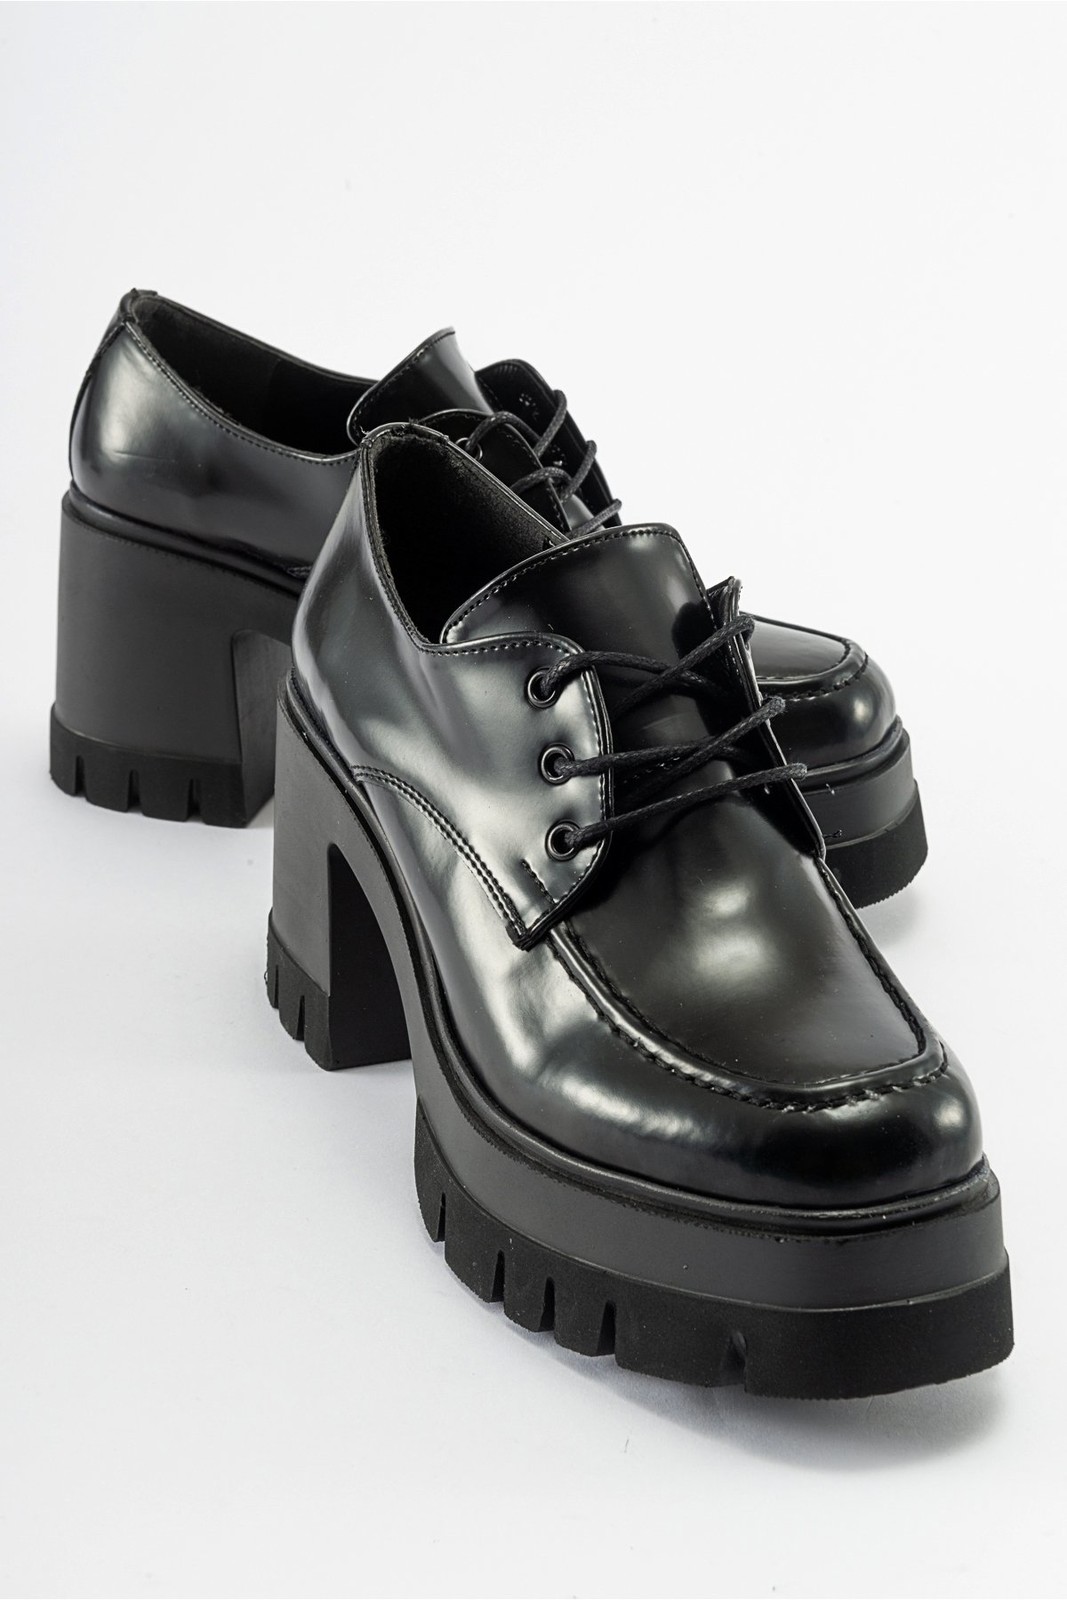 LuviShoes NİLUS Black Matte Patent Leather Lace Up Women's Platform Heeled Shoes